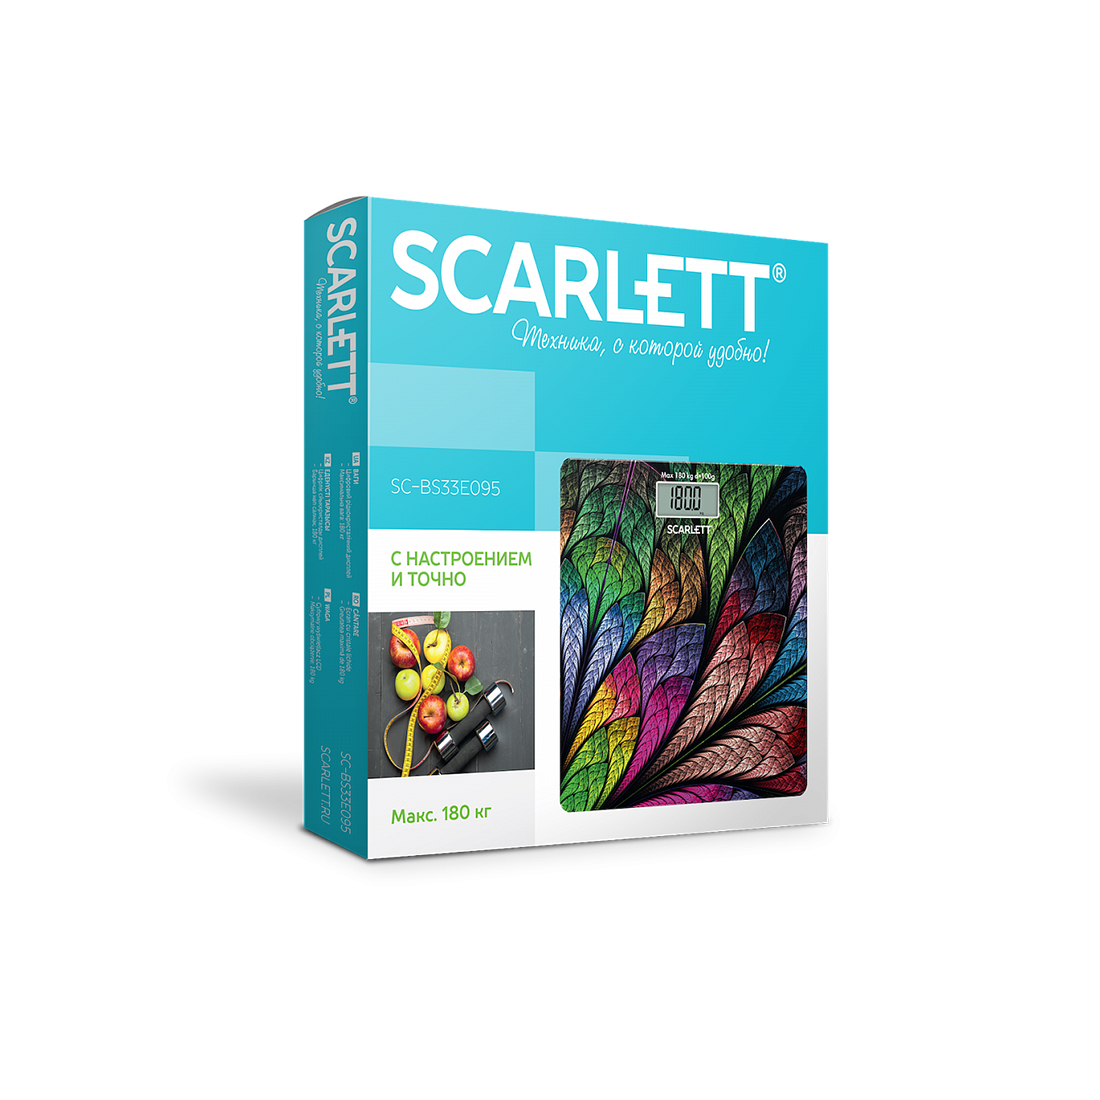 Весы Scarlett SC-BS33E095